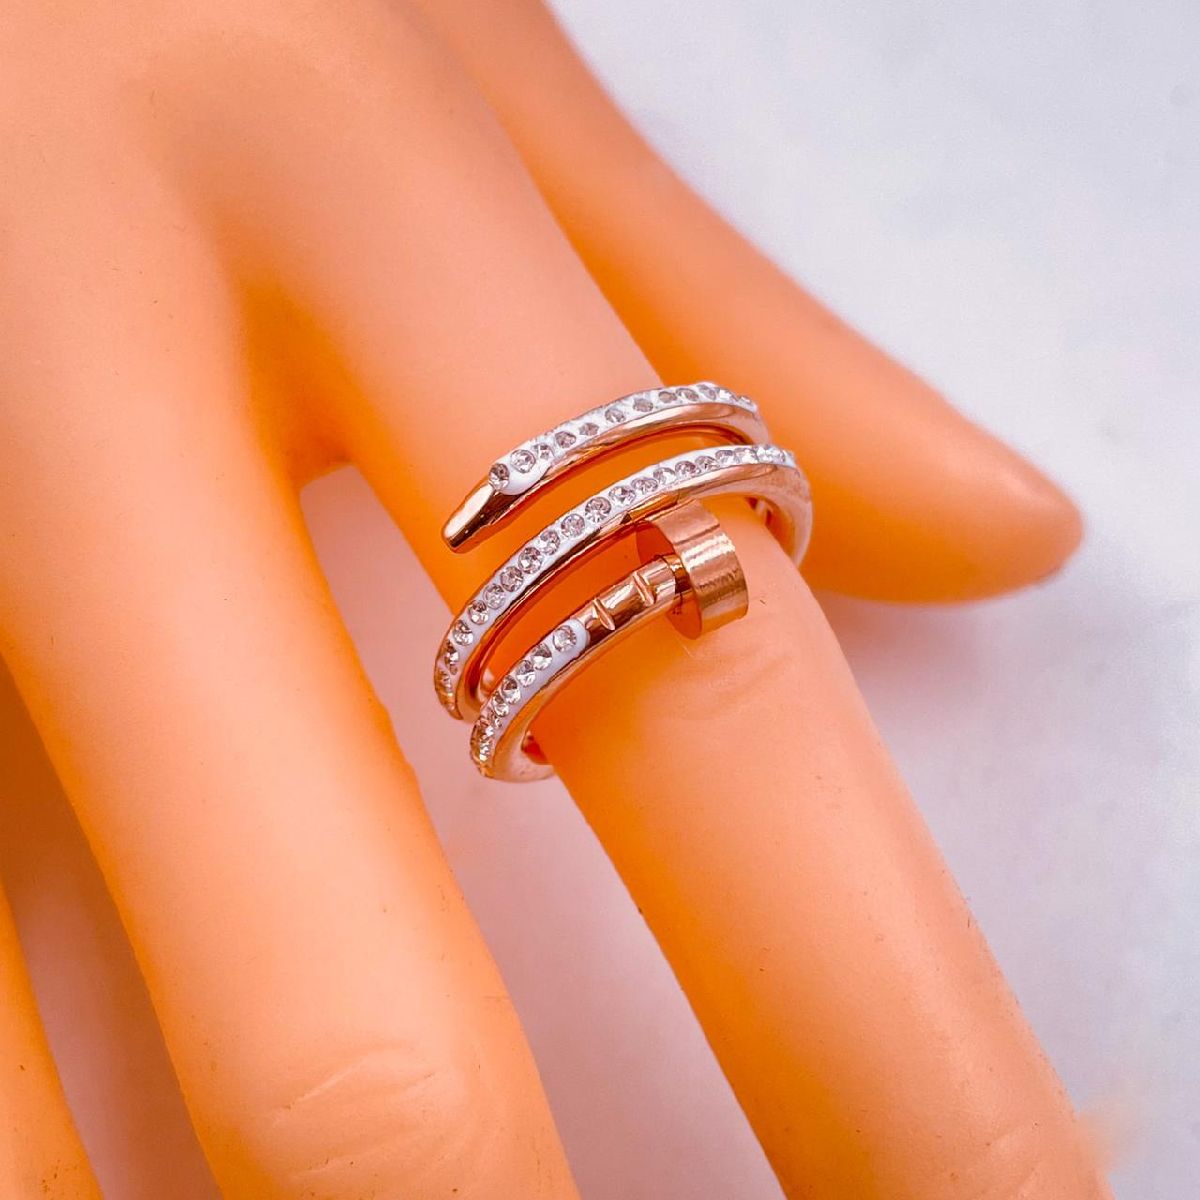 Nail art ring fashion lovely punk design ring - Elegant Elements - 77290